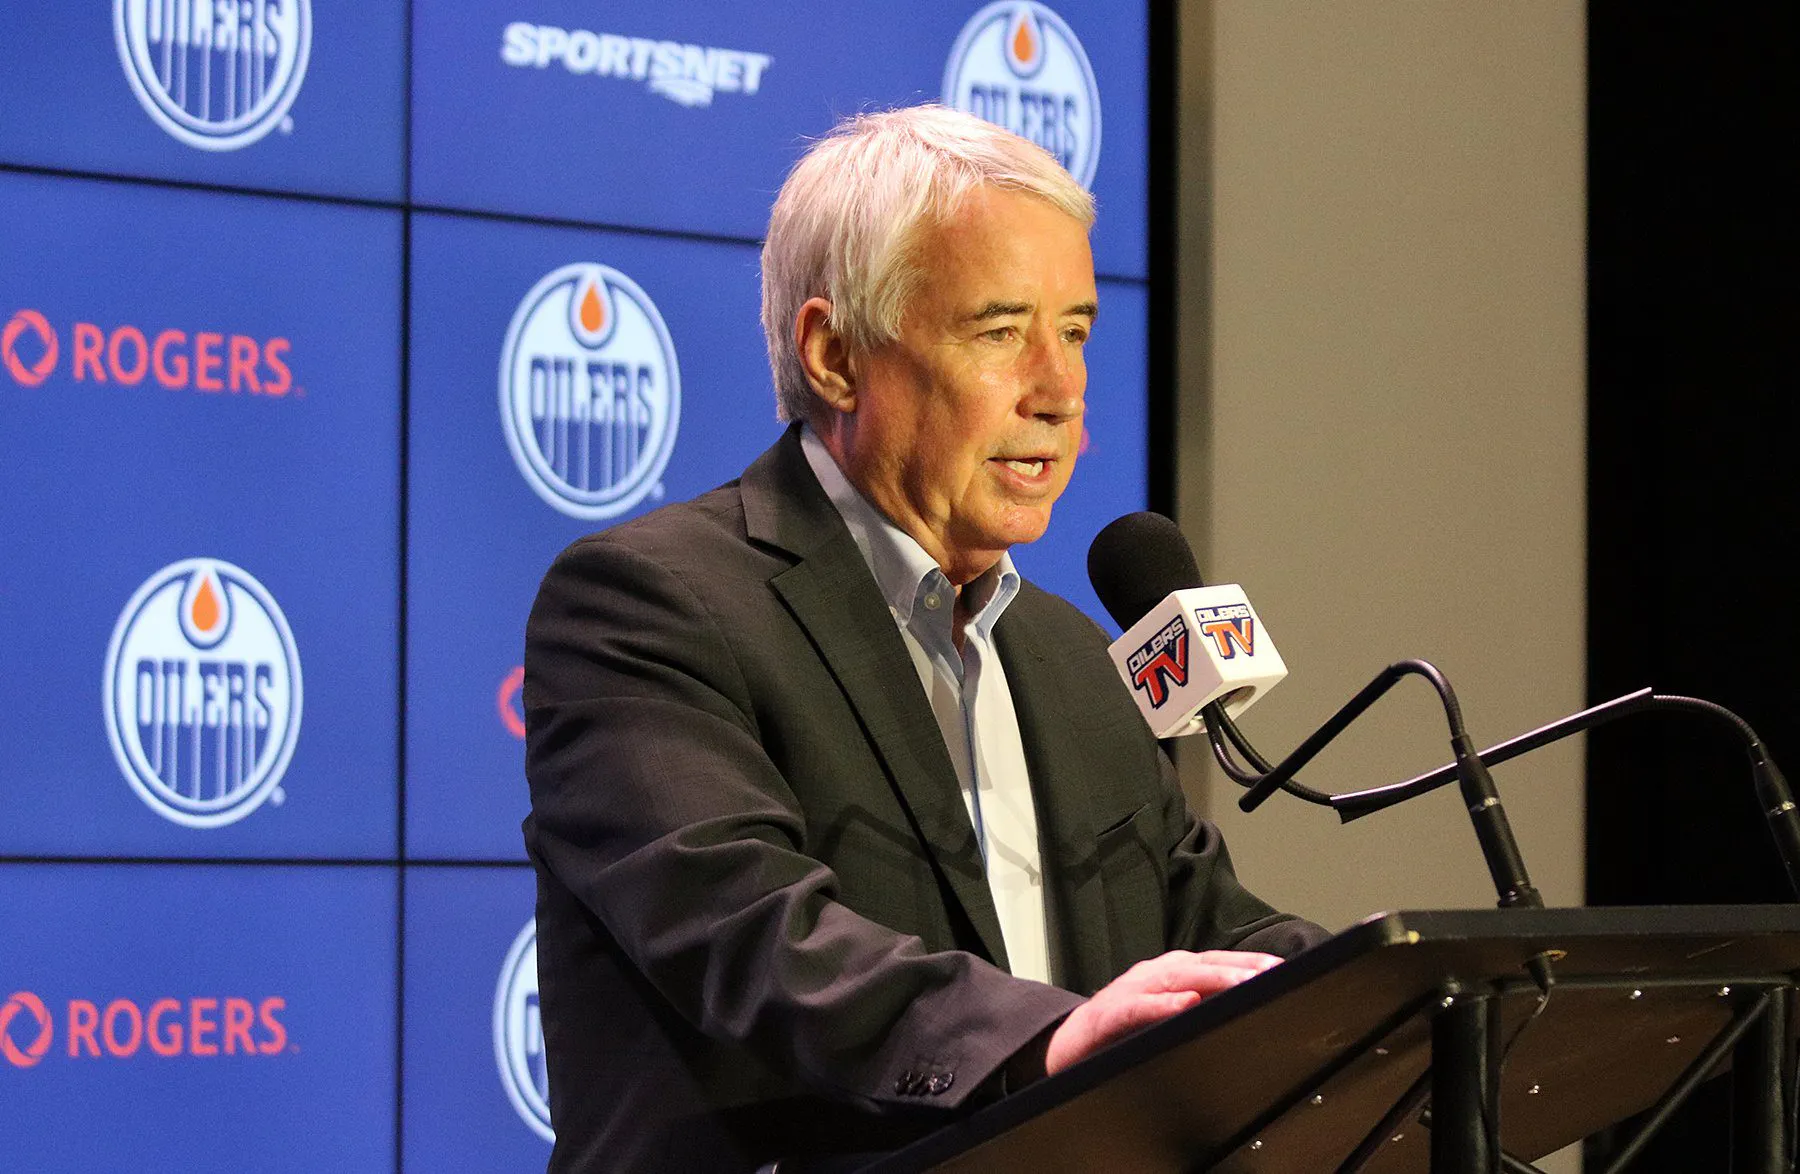 Report: former Hockey Canada president Bob Nicholson to testify on handling of sexual assault allegations